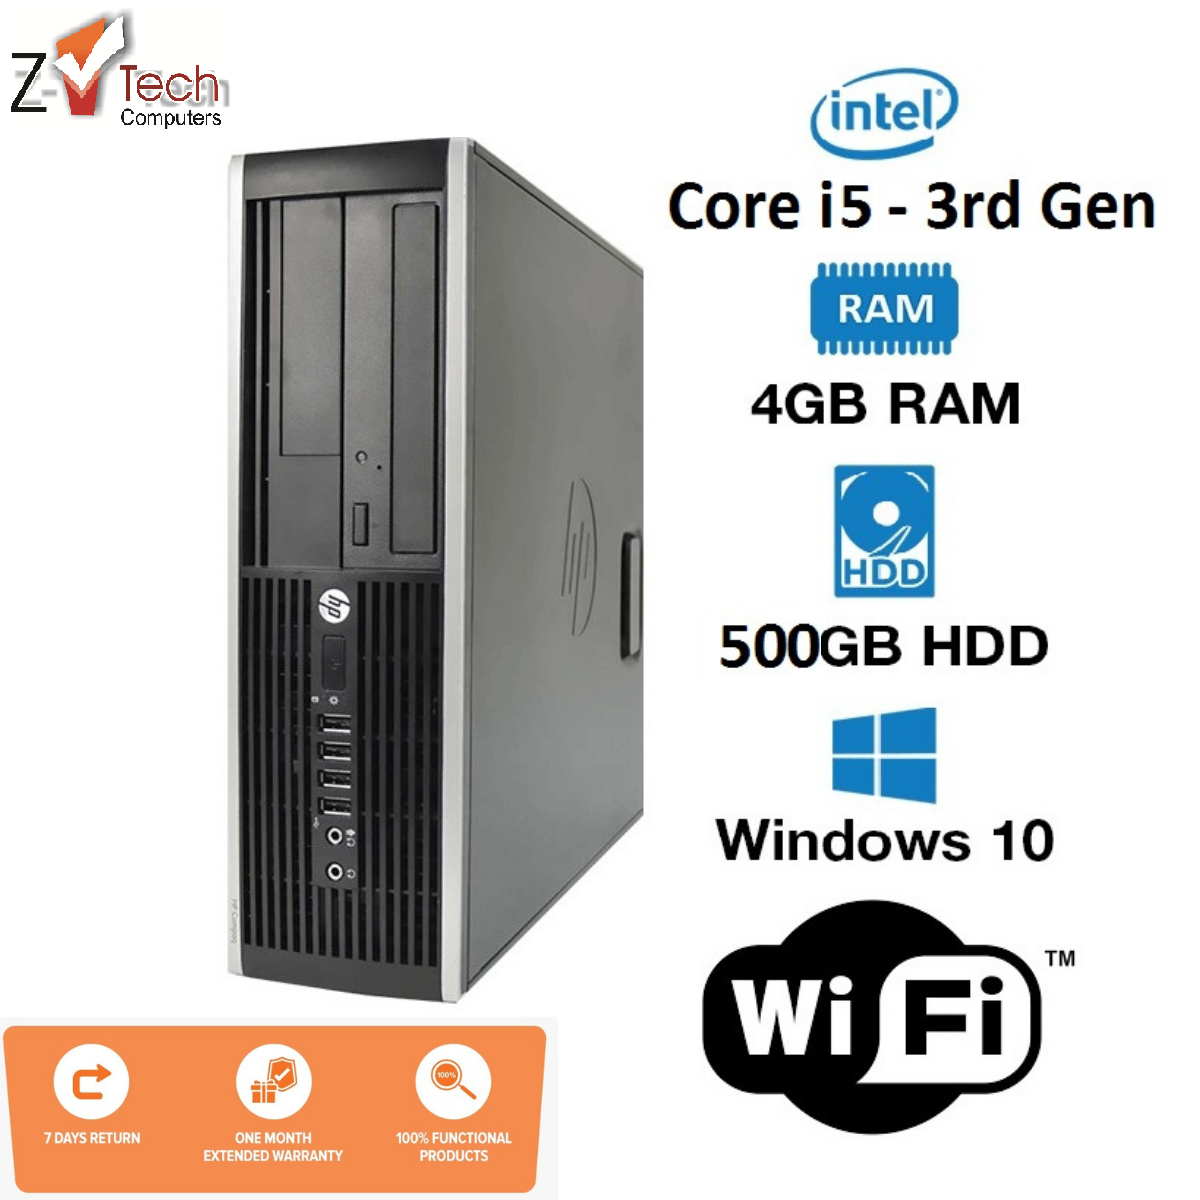 Renewed 00 Sff Desktop Computer Intel Core I5 3rd Gen 4gb Ddr3 250gb Hdd Windows 10 Wifi Buy Online At Best Prices In Pakistan Daraz Pk